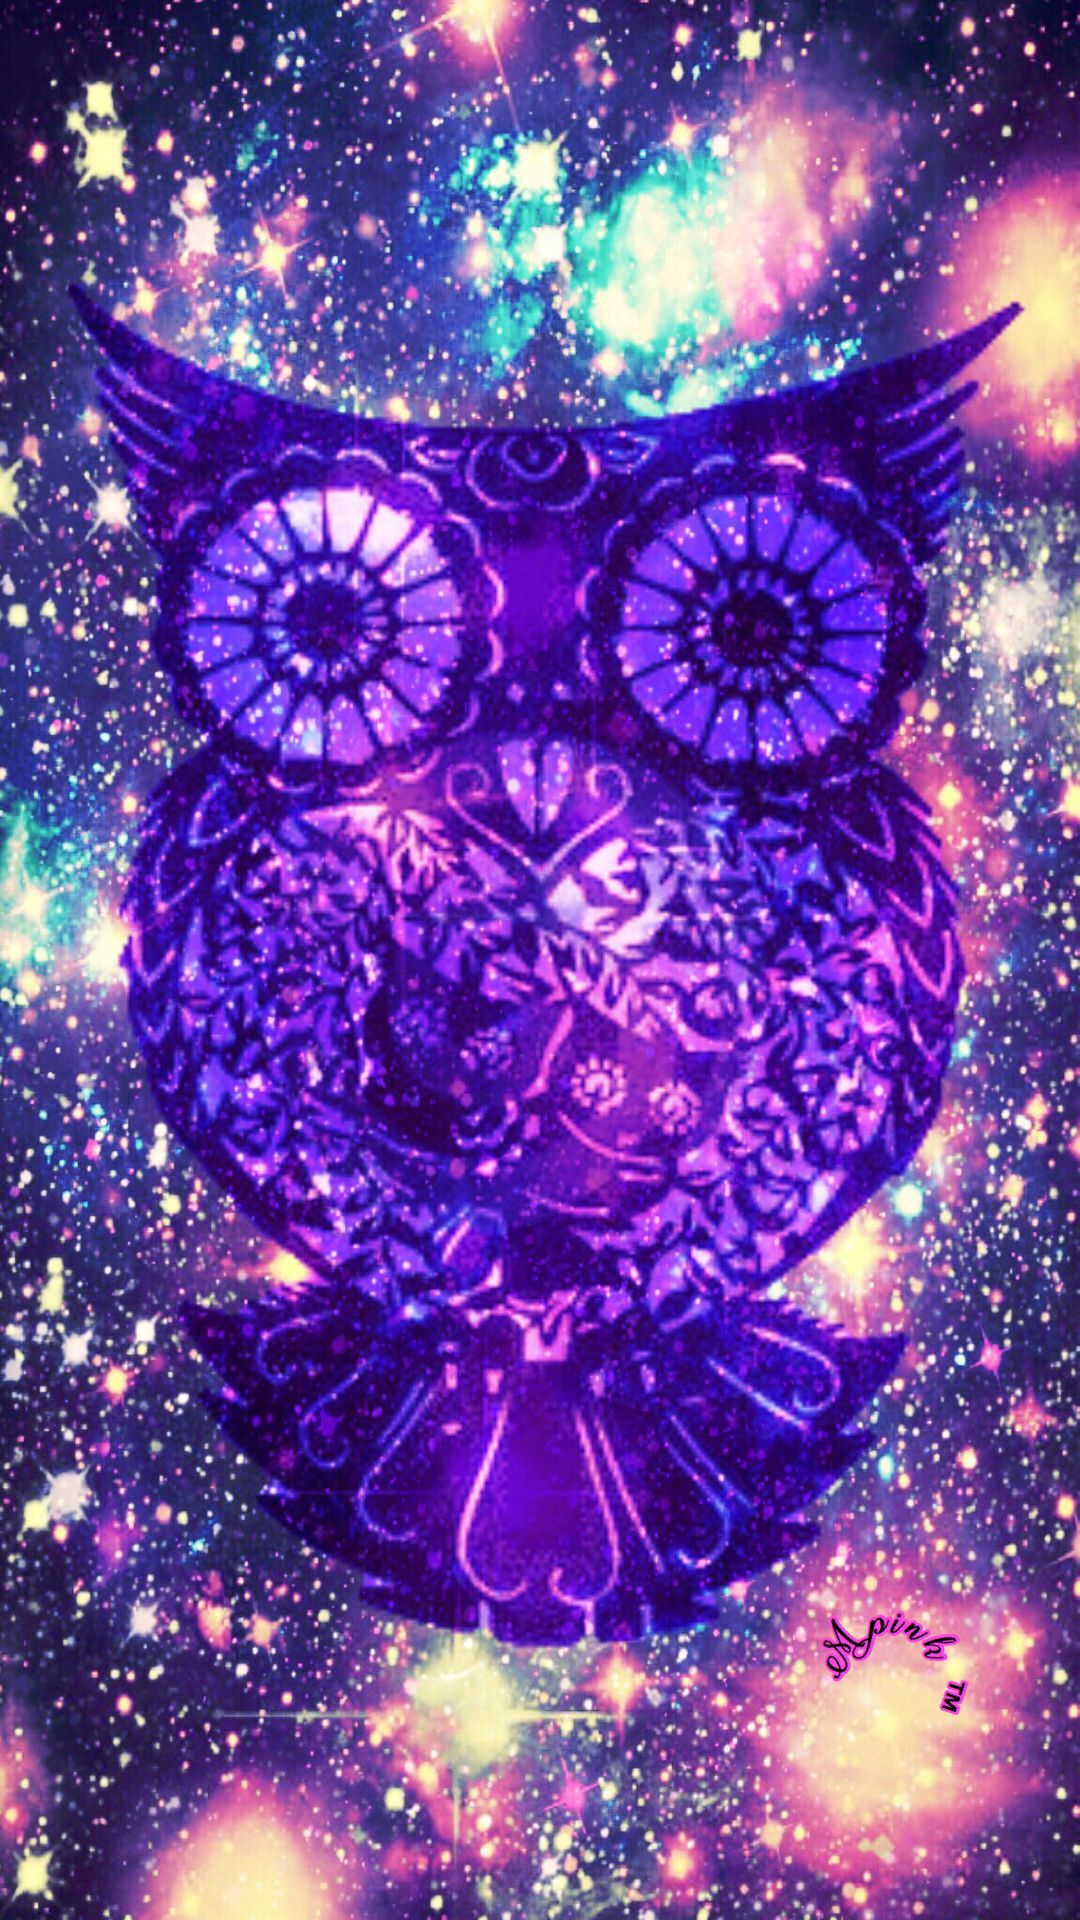 Cute Owl Tumblr Wallpaper For iPhone